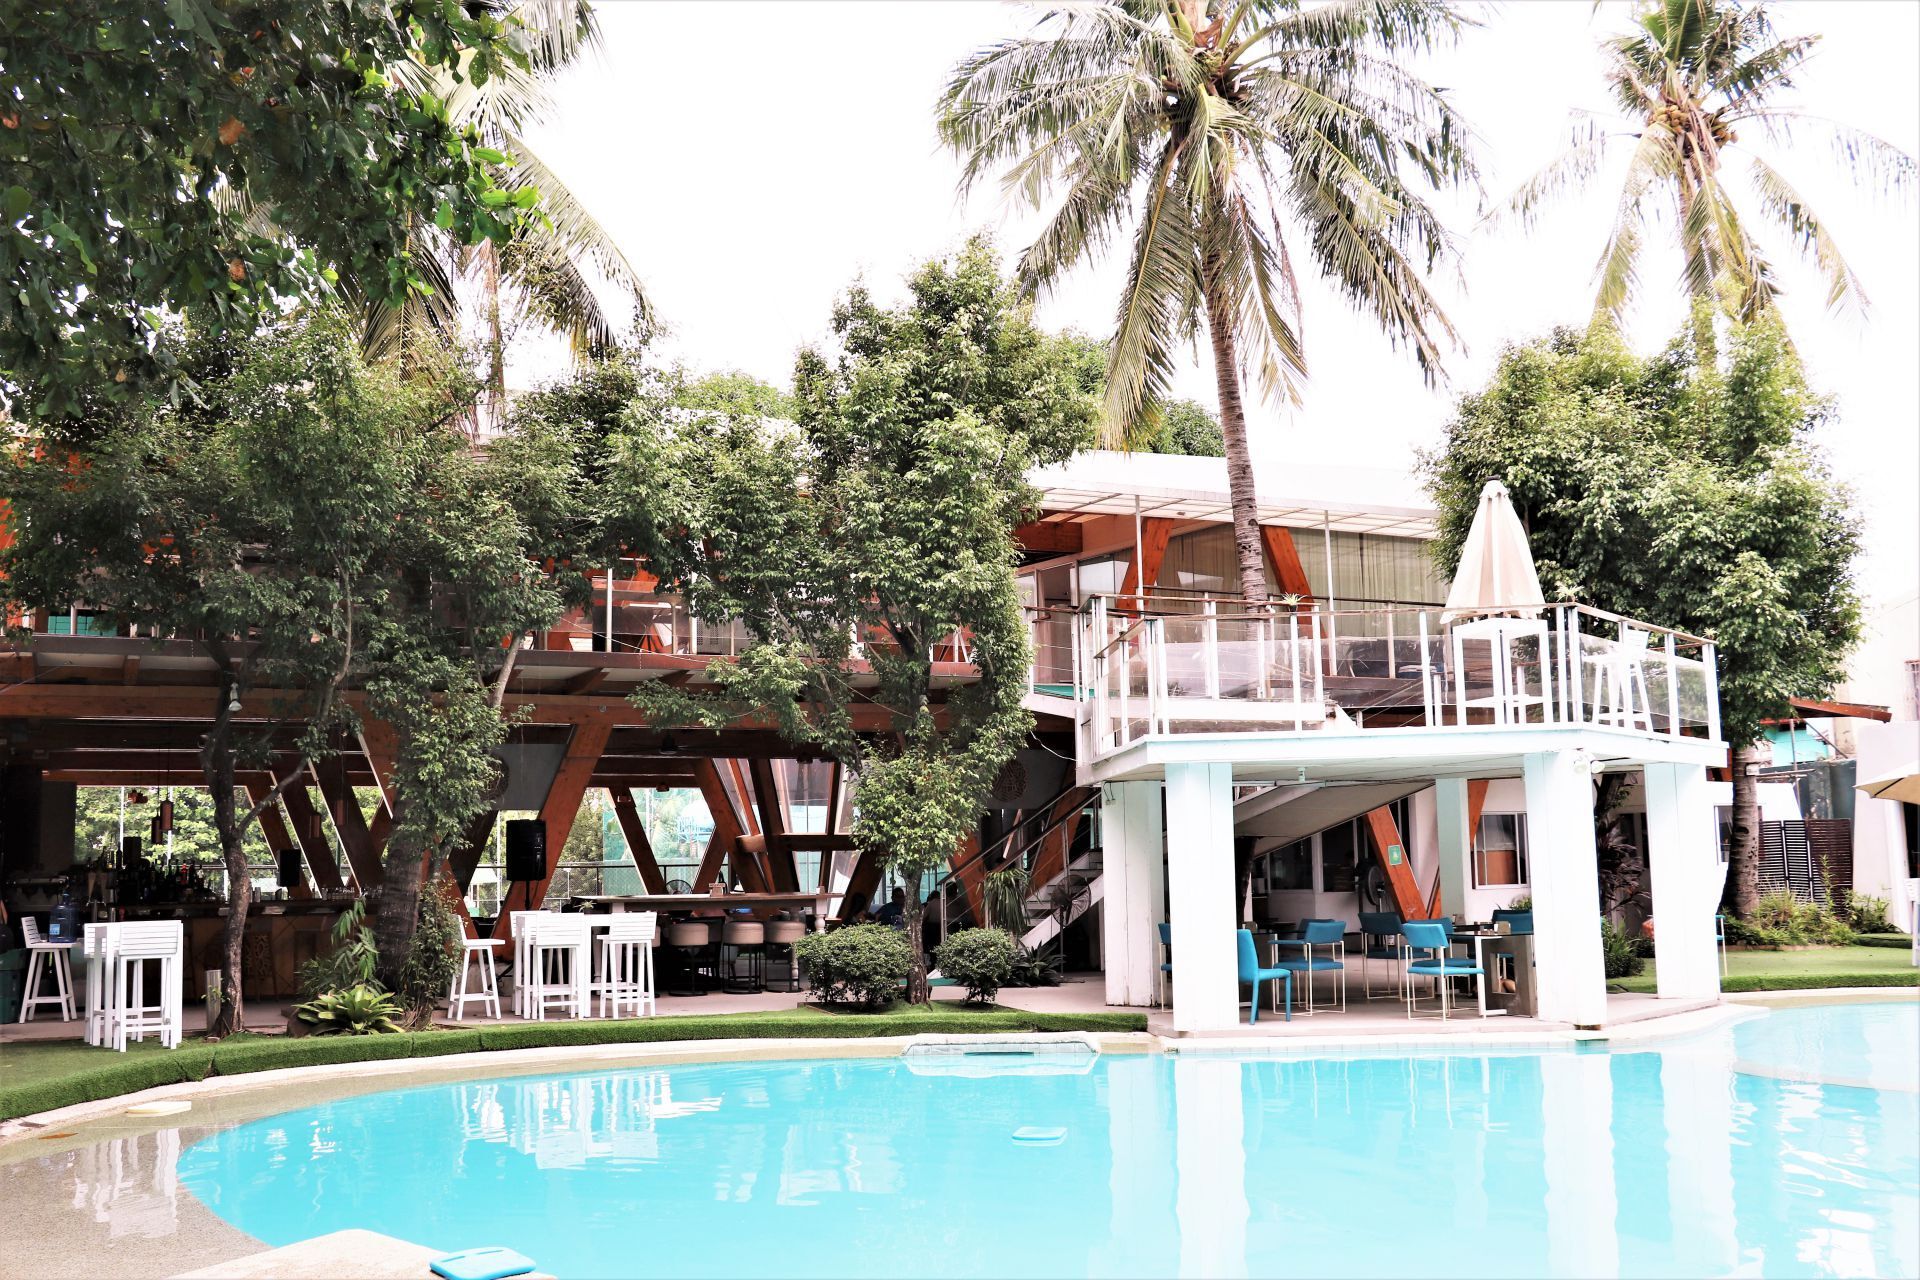 Gazebo Pool Asmara Urban Resort & Lifestyle Village Cebu